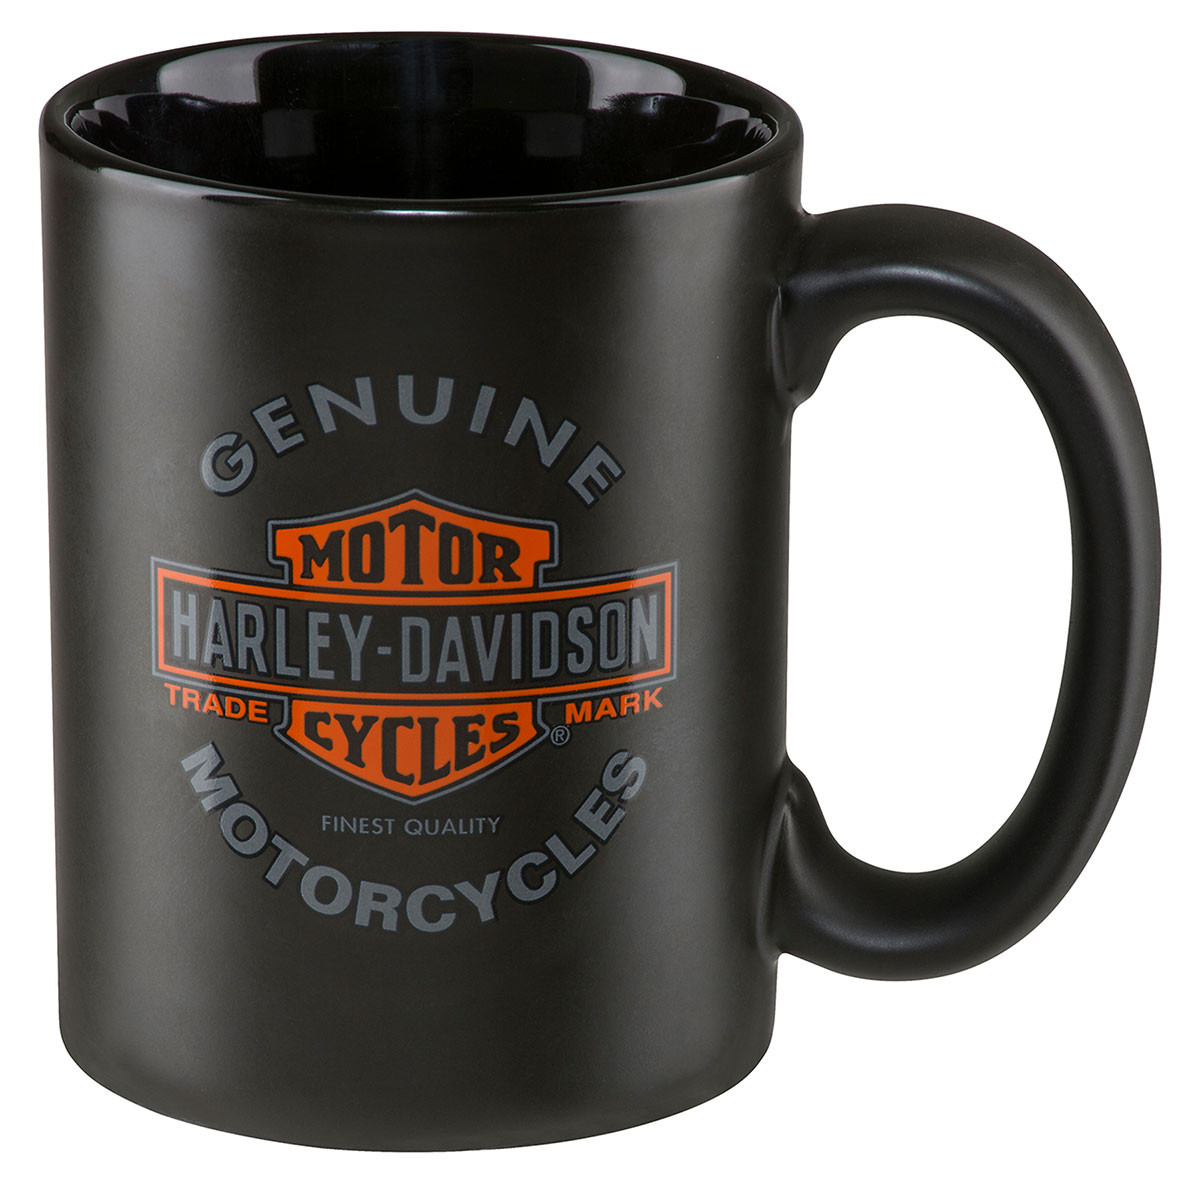 Harley-Davidson Genuine Motorcycles Mug